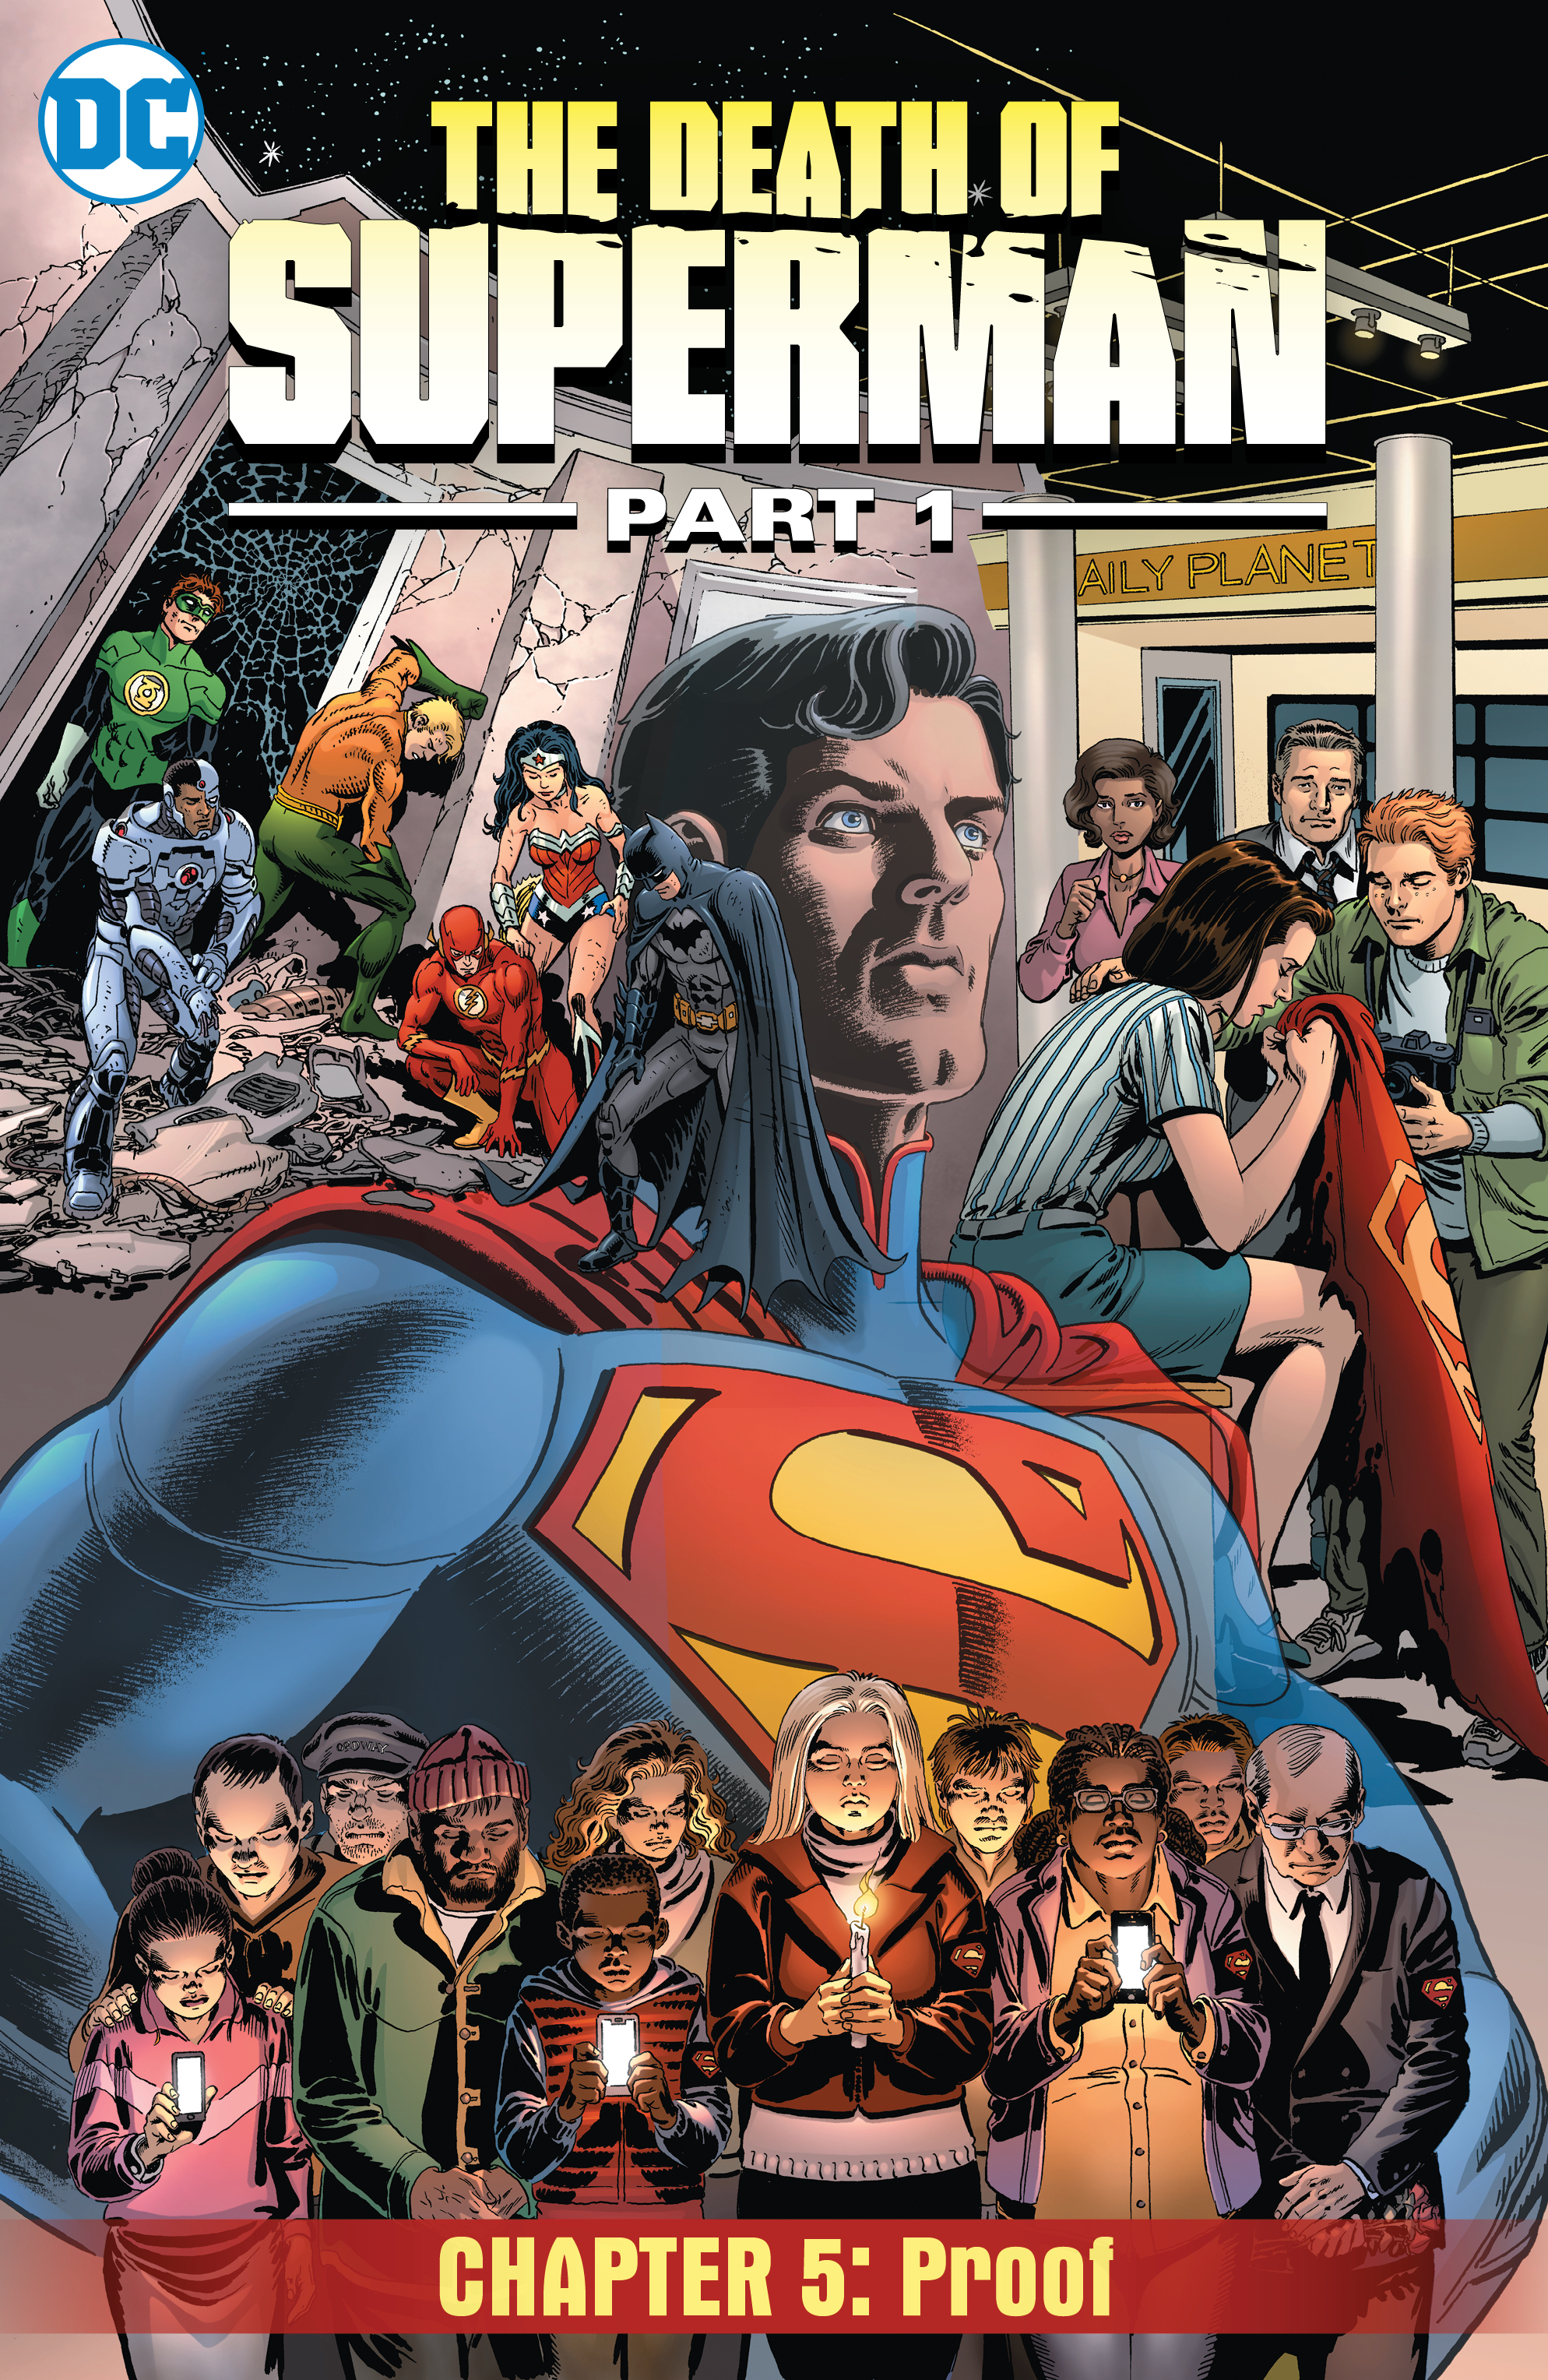 Death of Superman, Part 1 #5 preview images